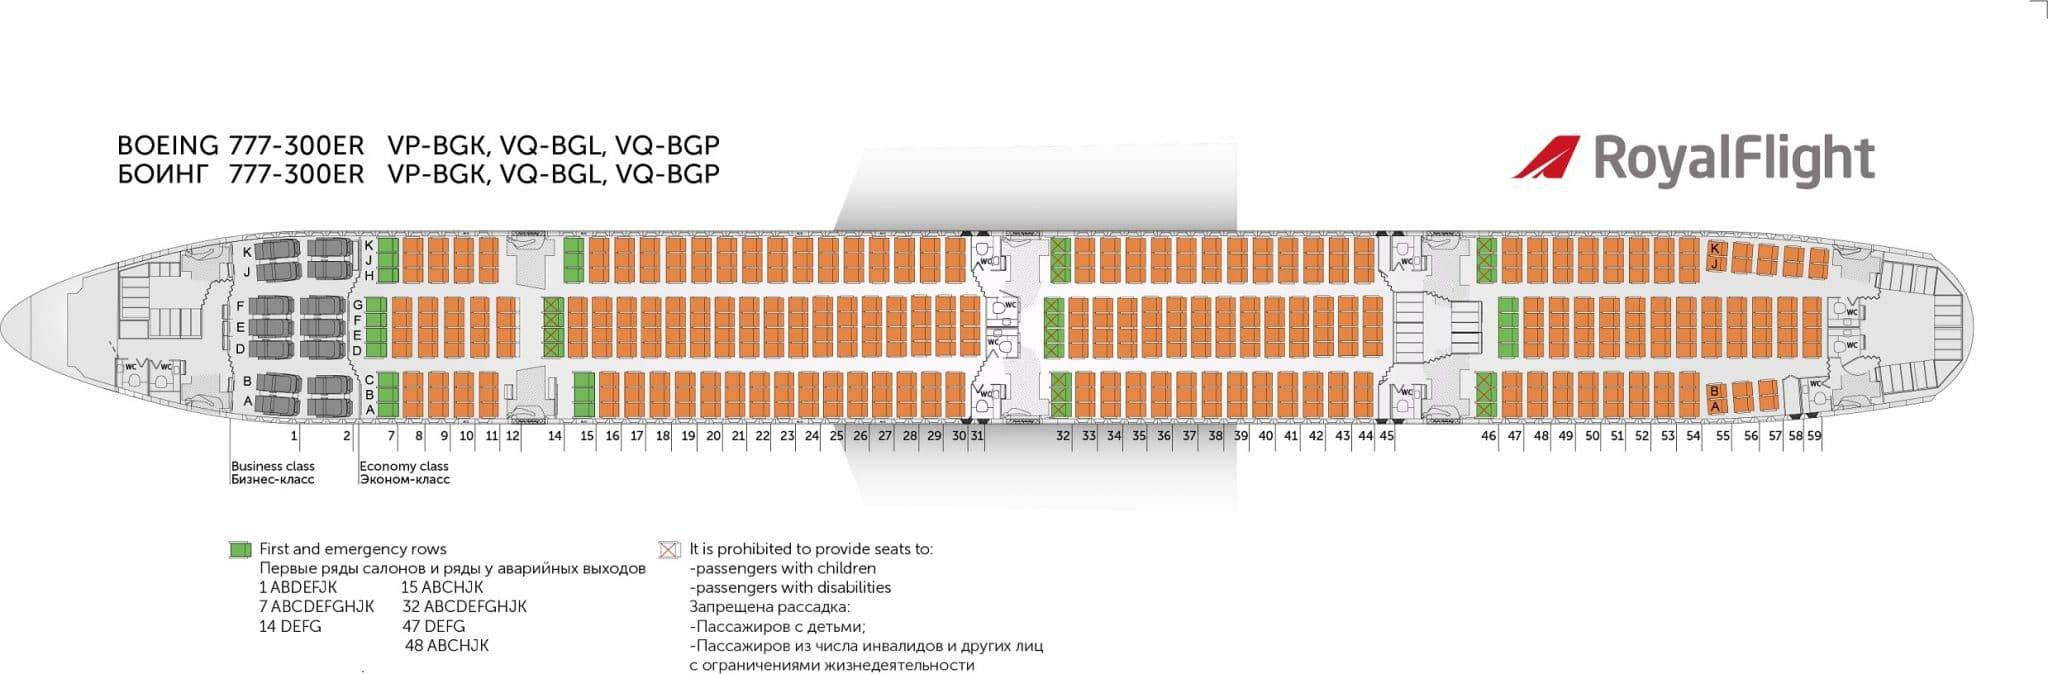 Seat map emirates boeing b777 300er three class | seatmaestro